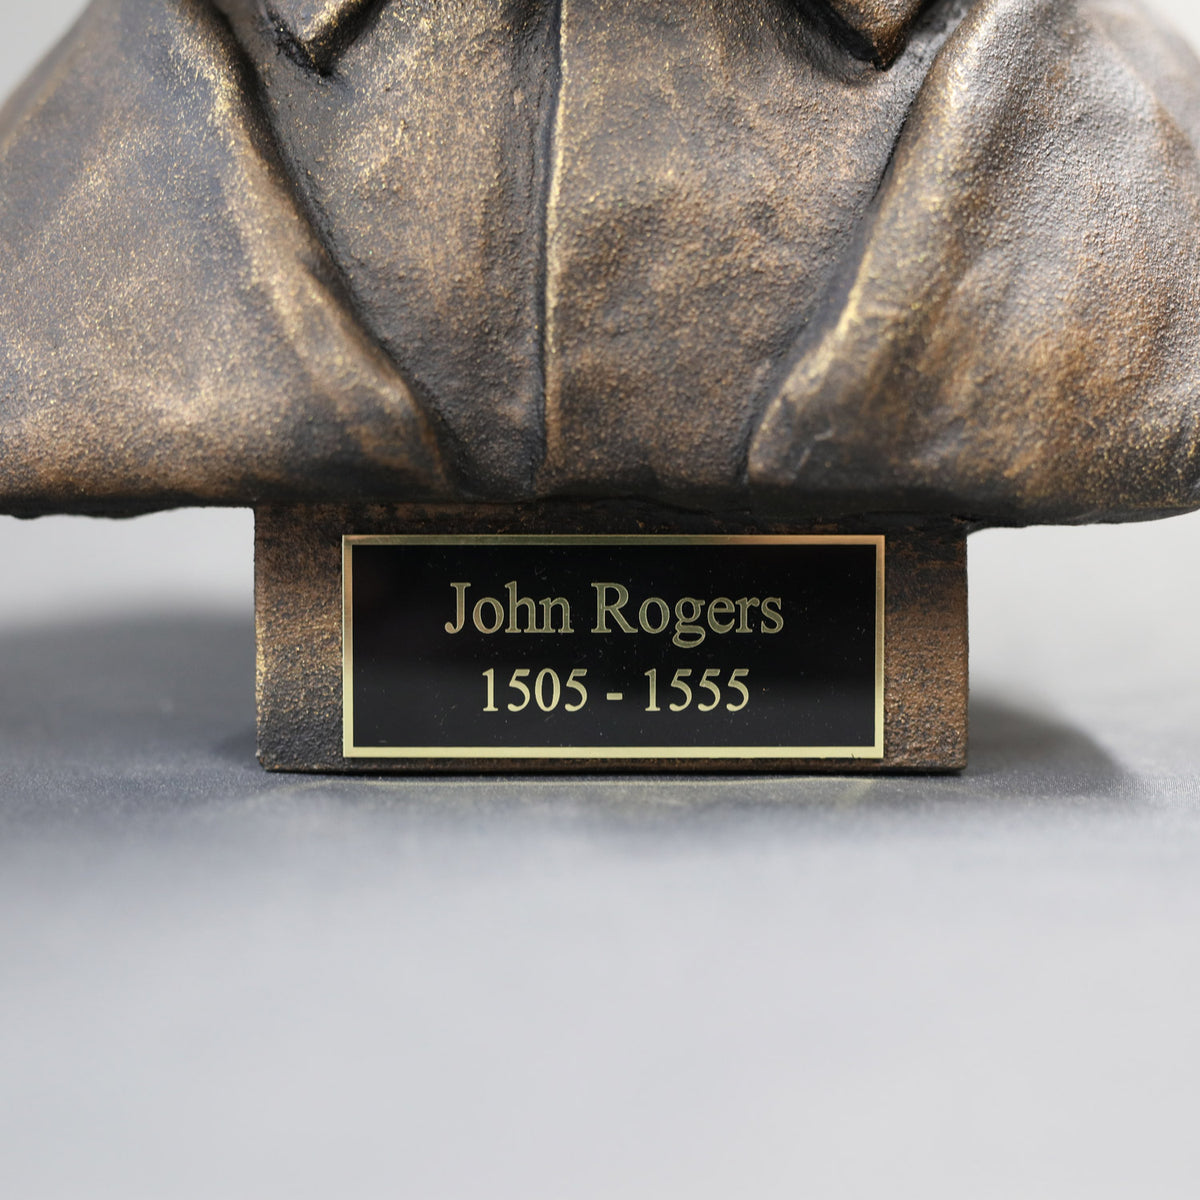 John Rogers - Sculpture